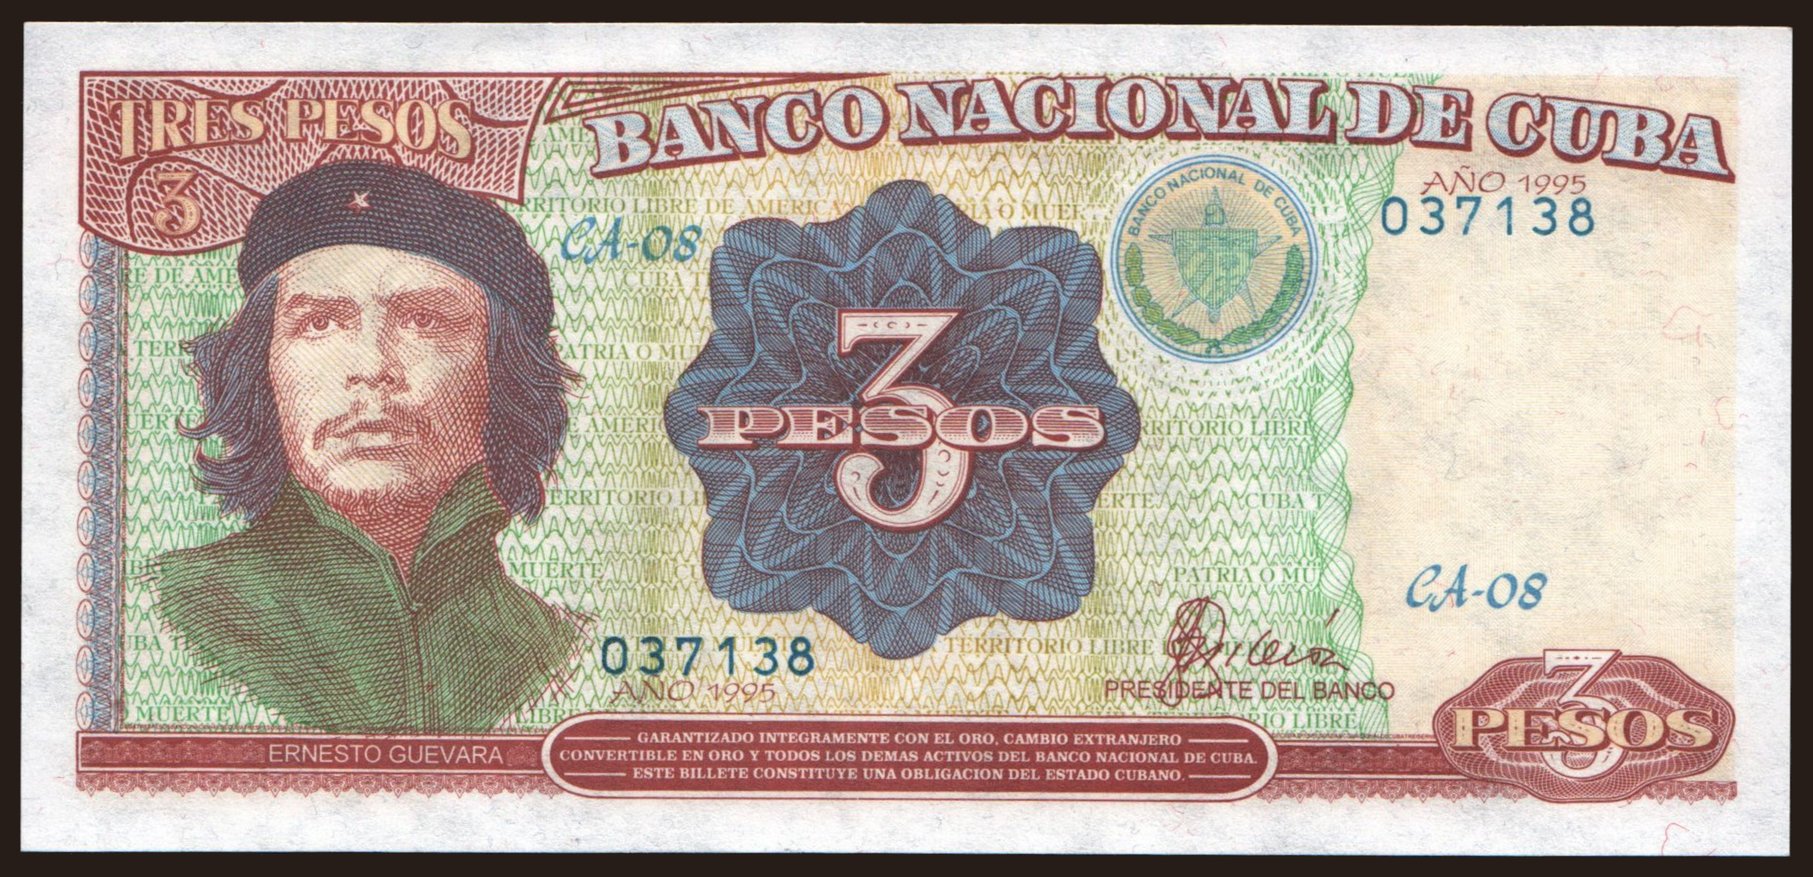 3 pesos, 1995